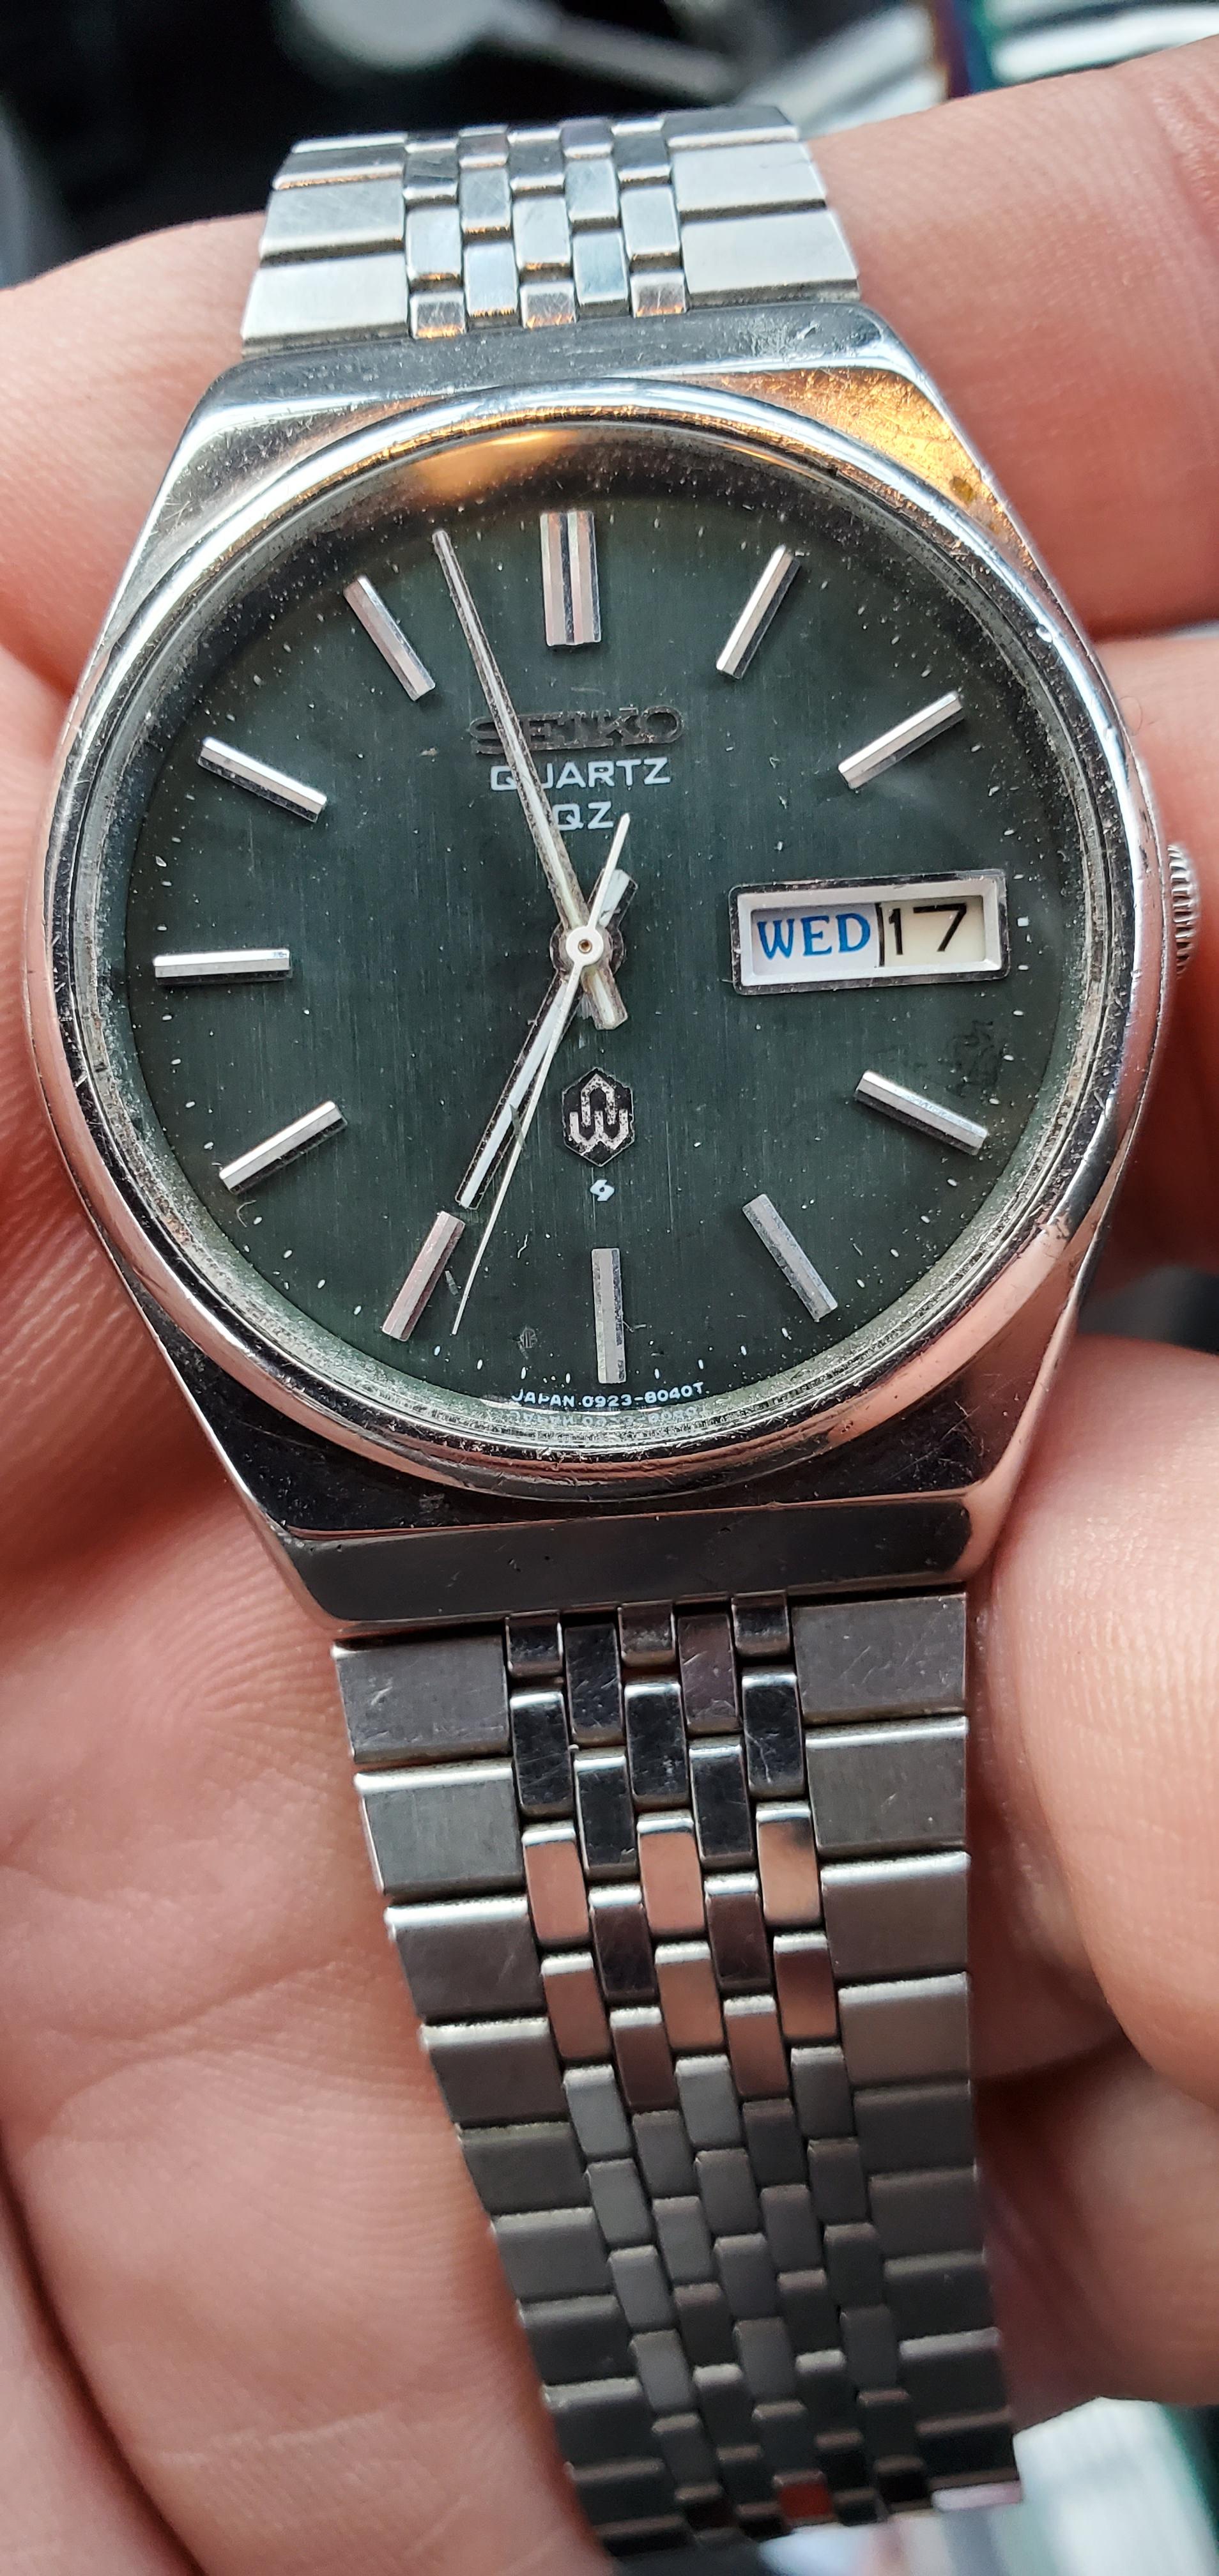 Vintage Seiko quartz (1969-1989) - Your Watch Collection - Watch Repair Talk